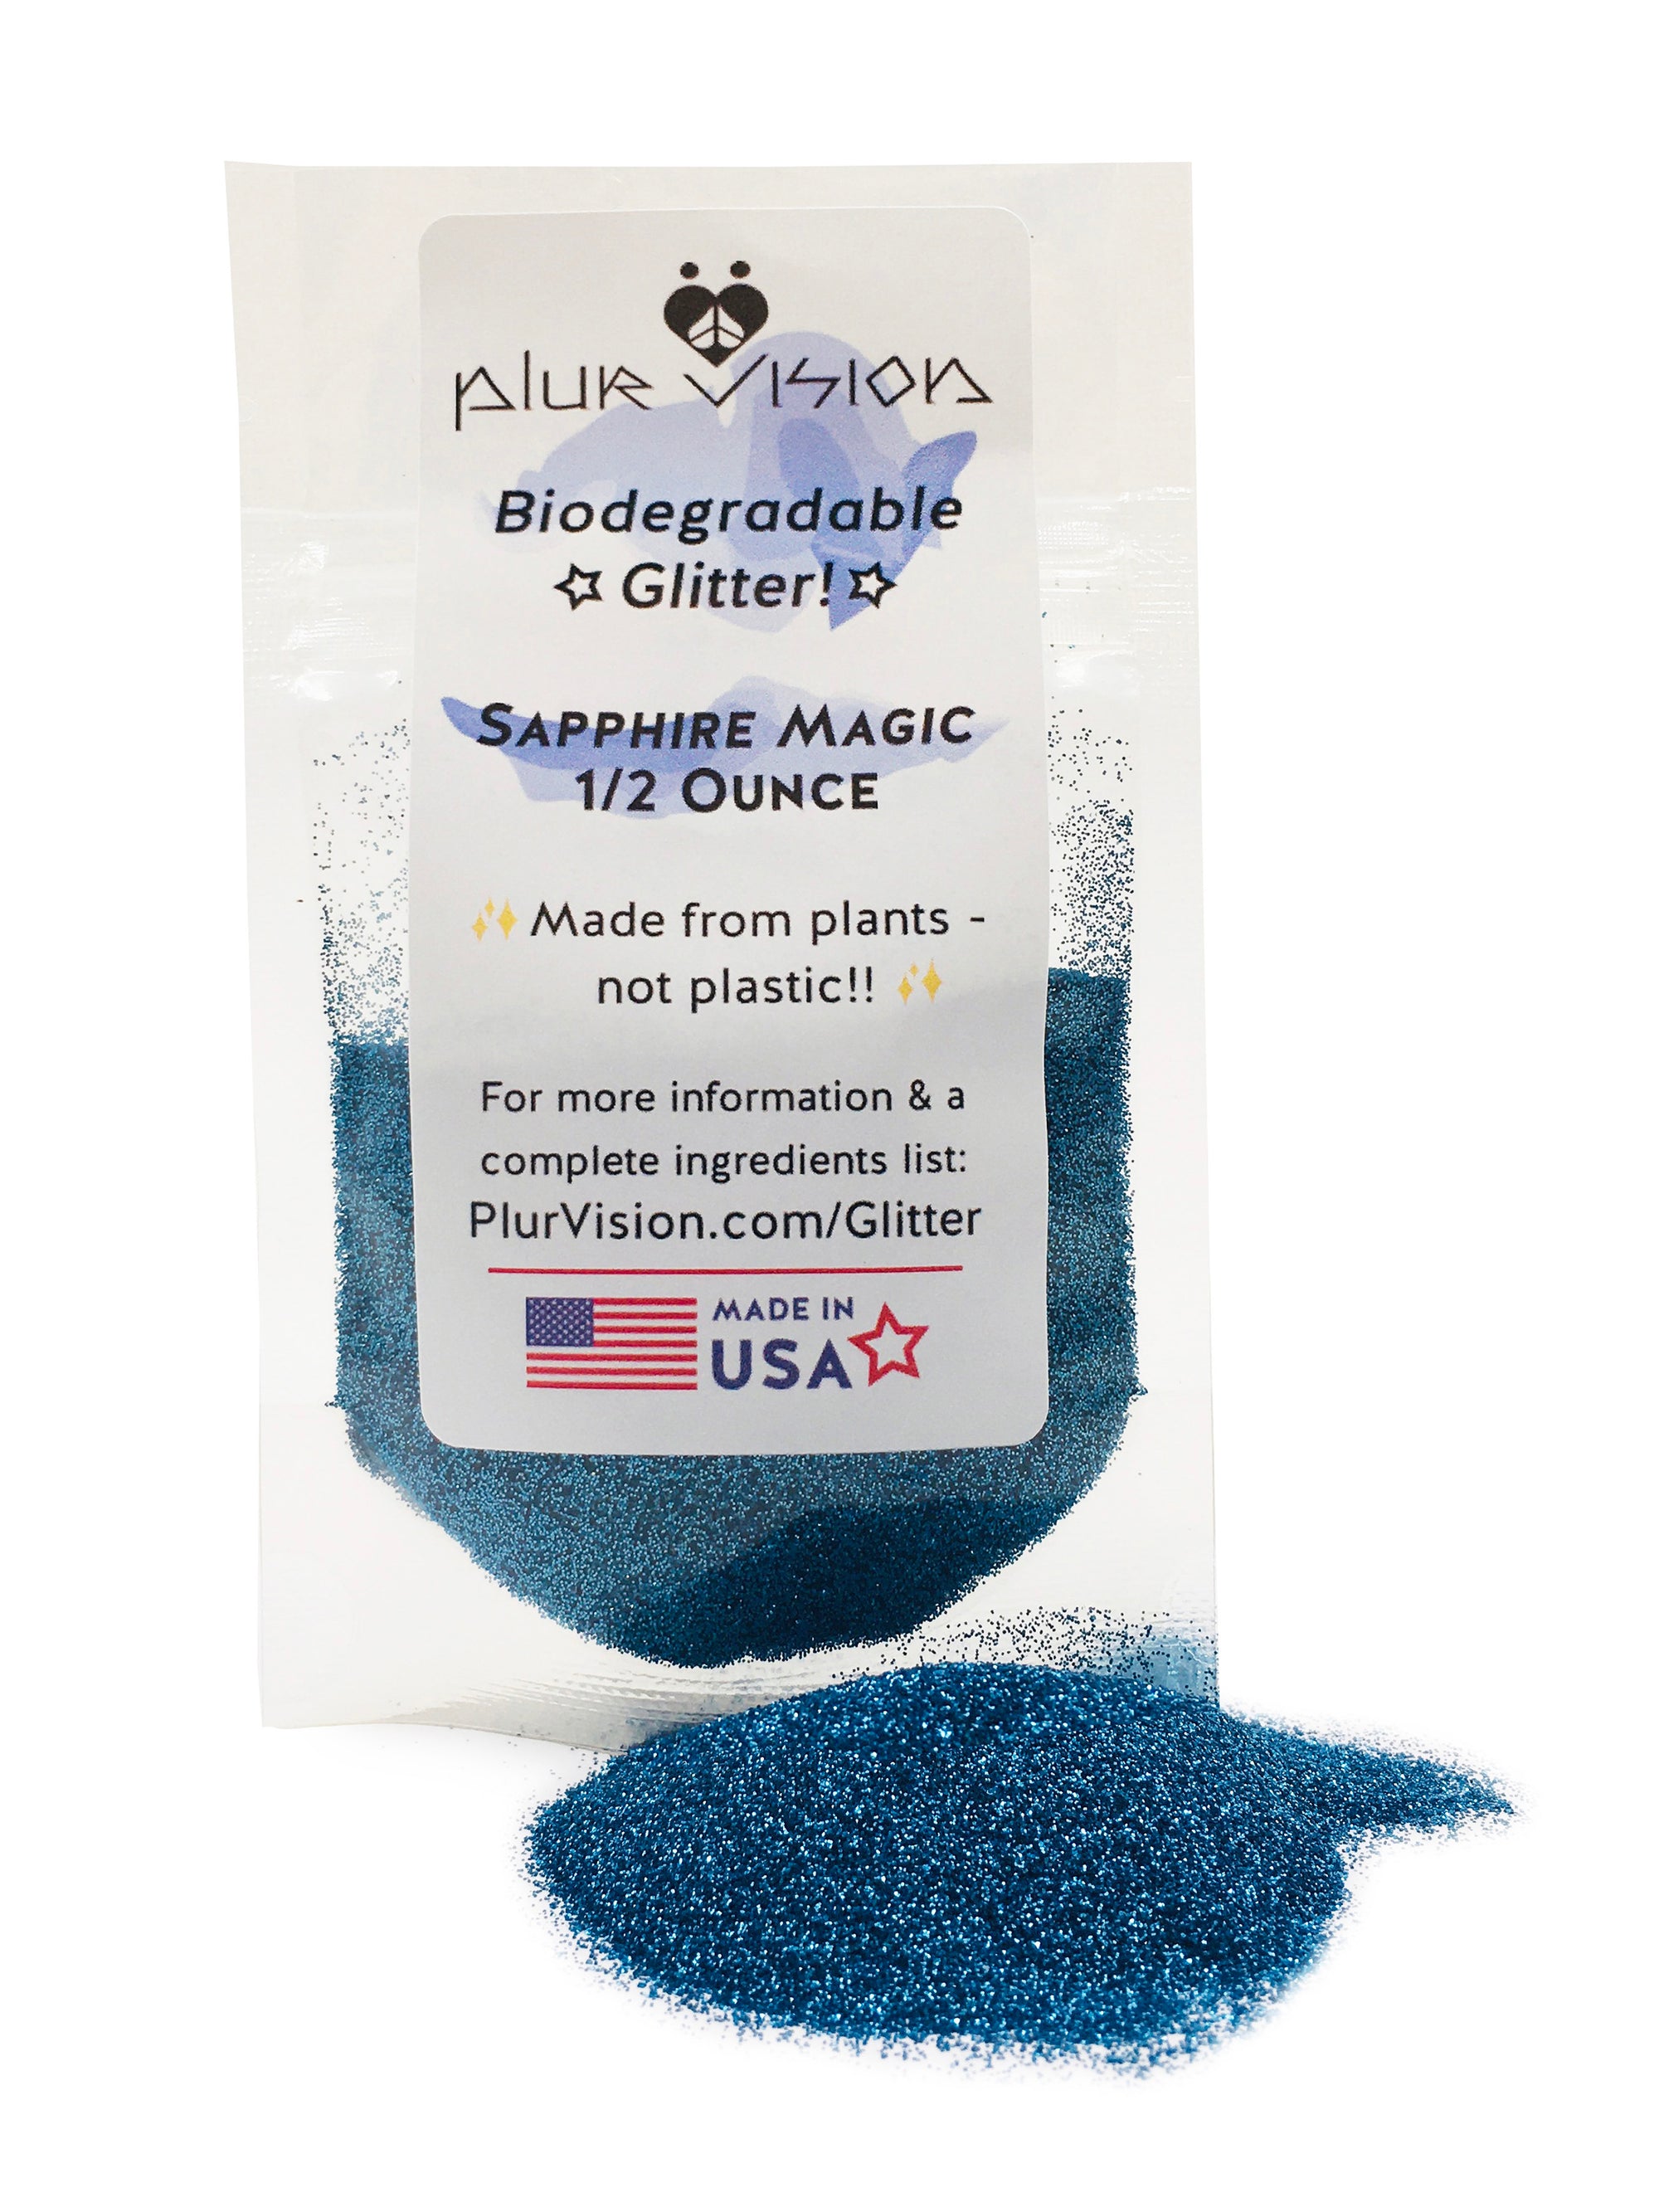 ✨ Sapphire Magic Biodegradable Glitter! ✨